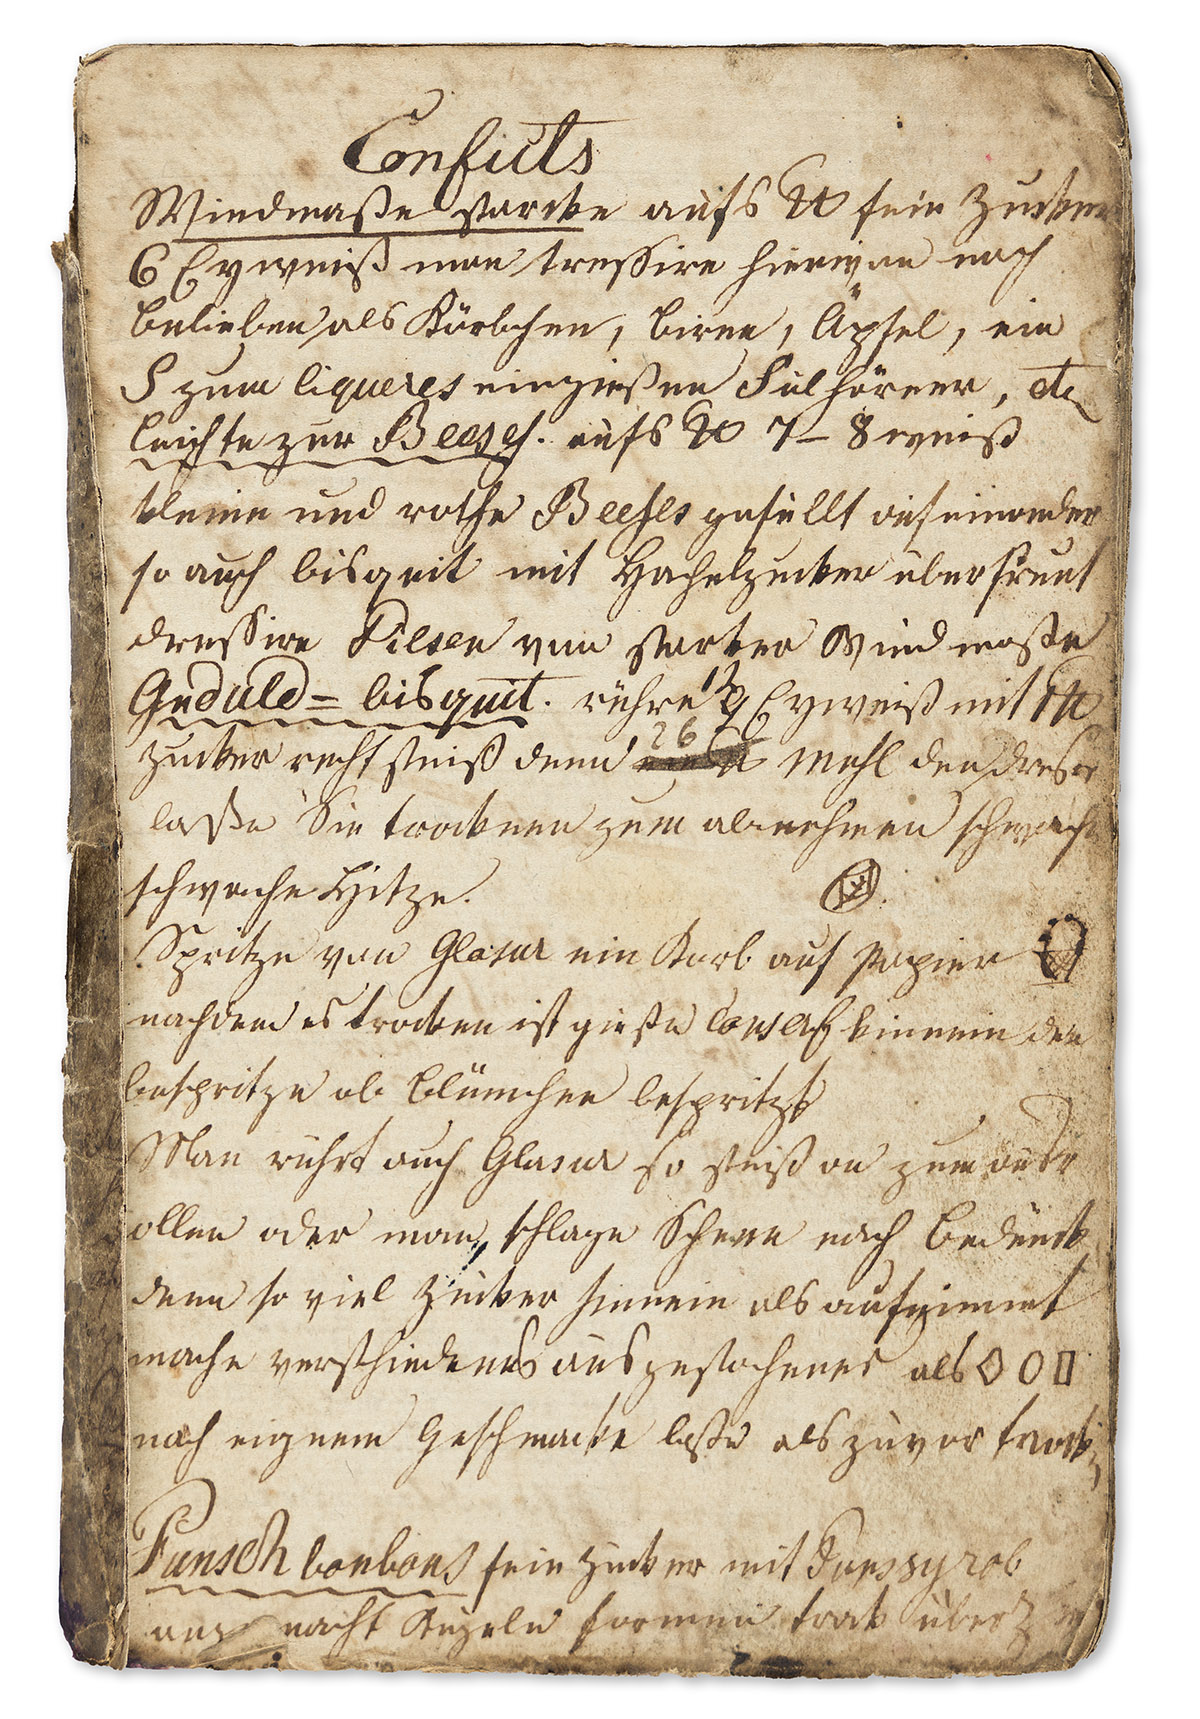 Fuchs, Jean (b. 1809; fl. circa 1830) Handwritten Pastry Recipe Book and Passport.